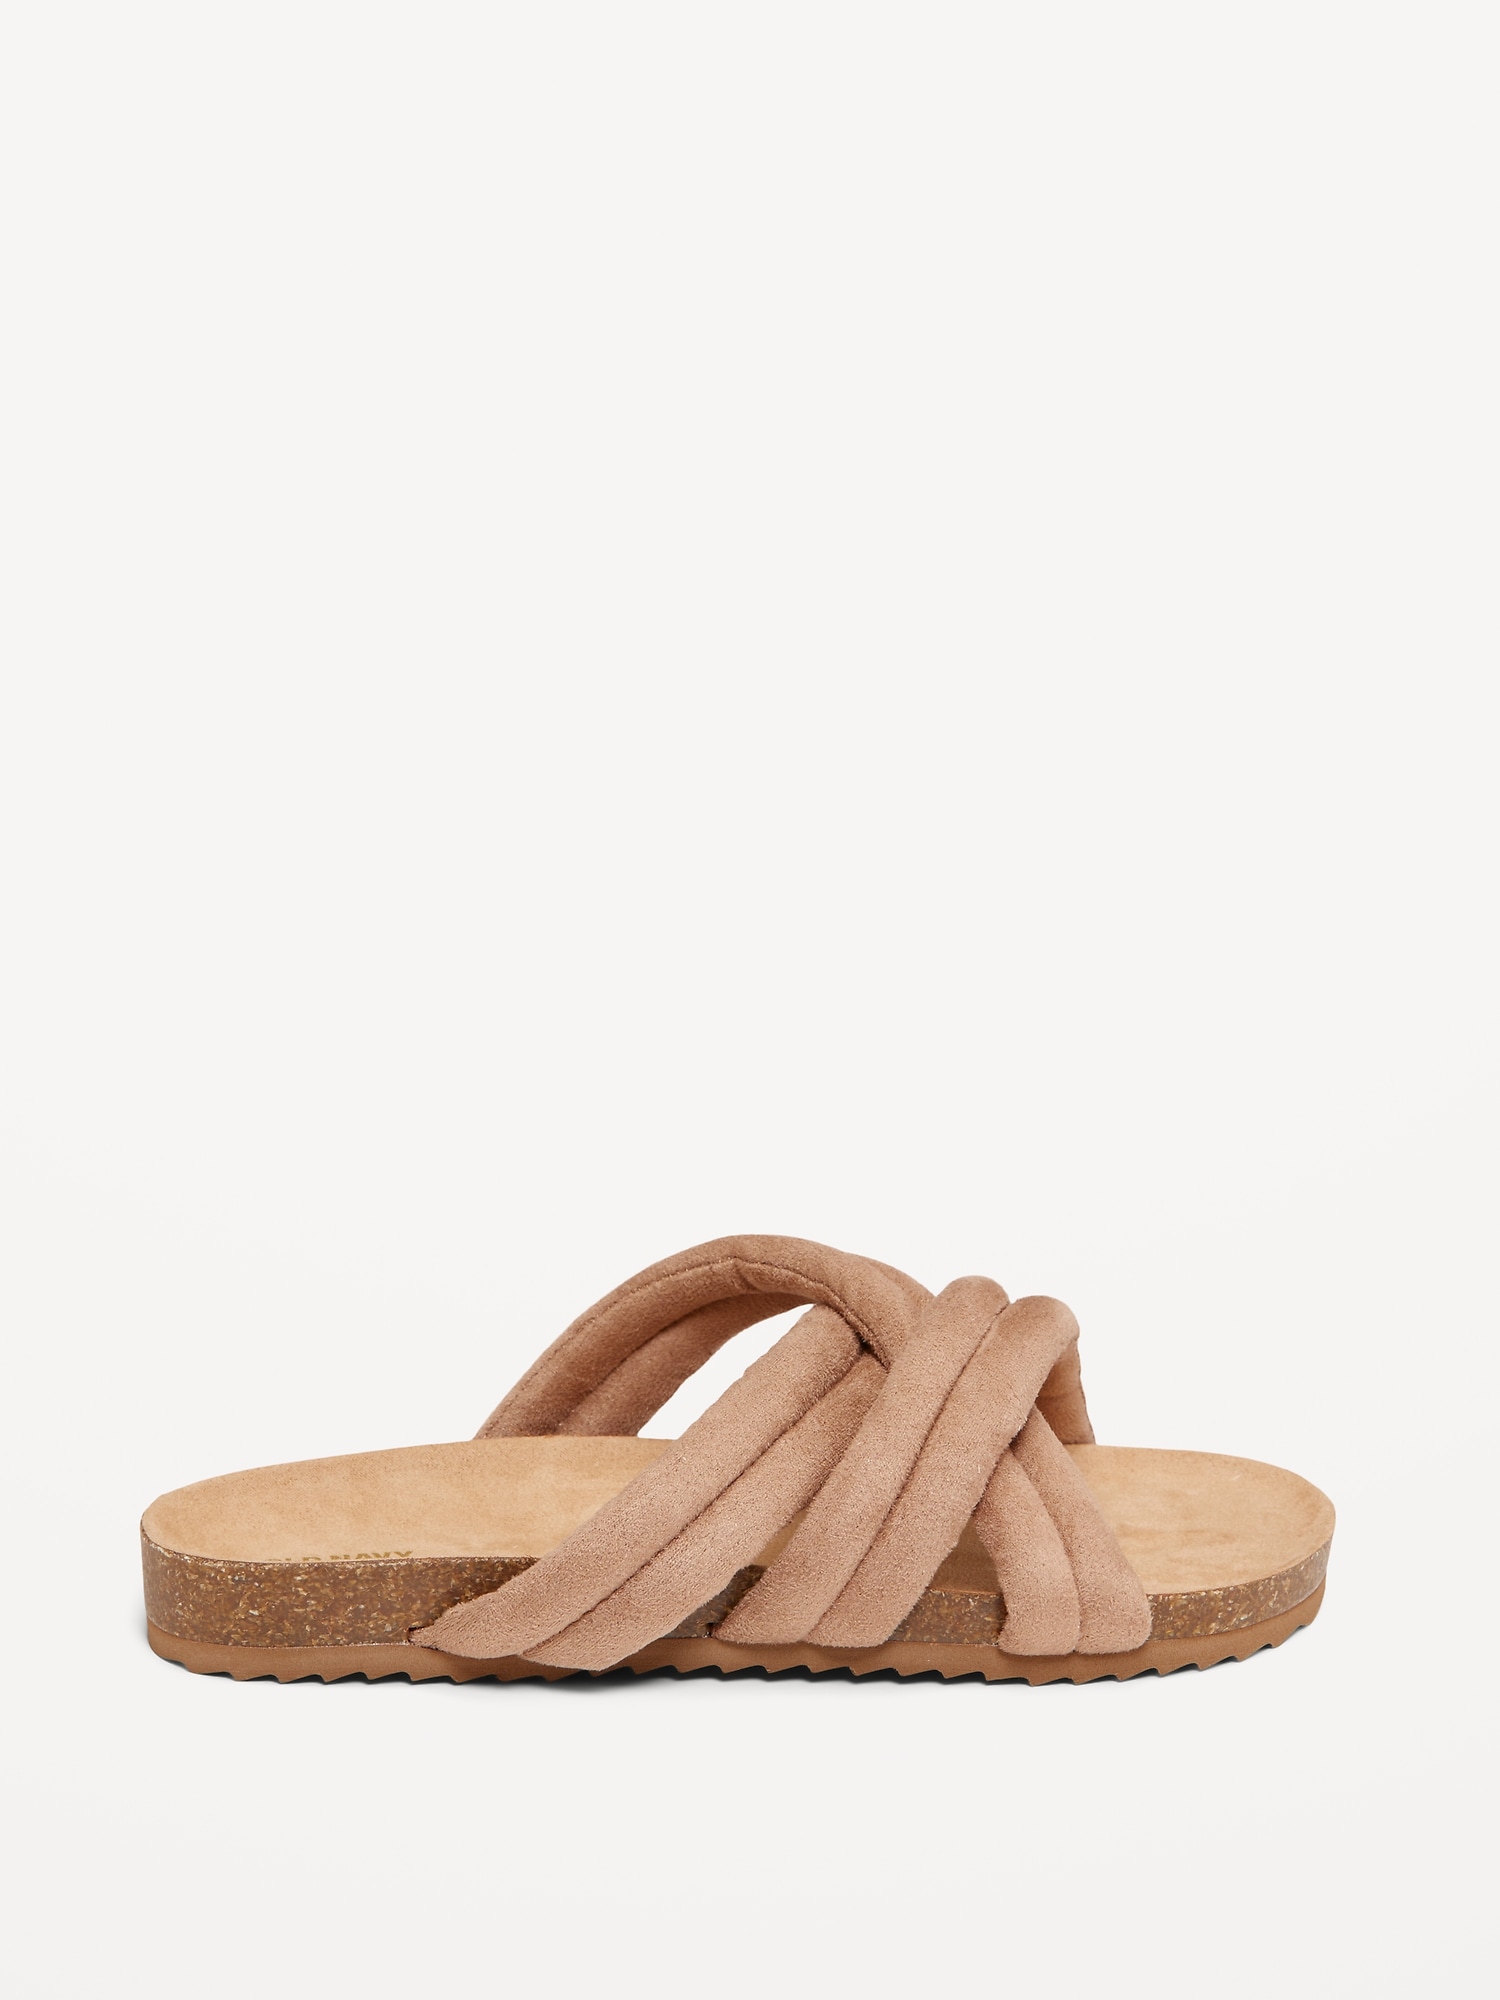 Puffy Slide Sandals for Girls